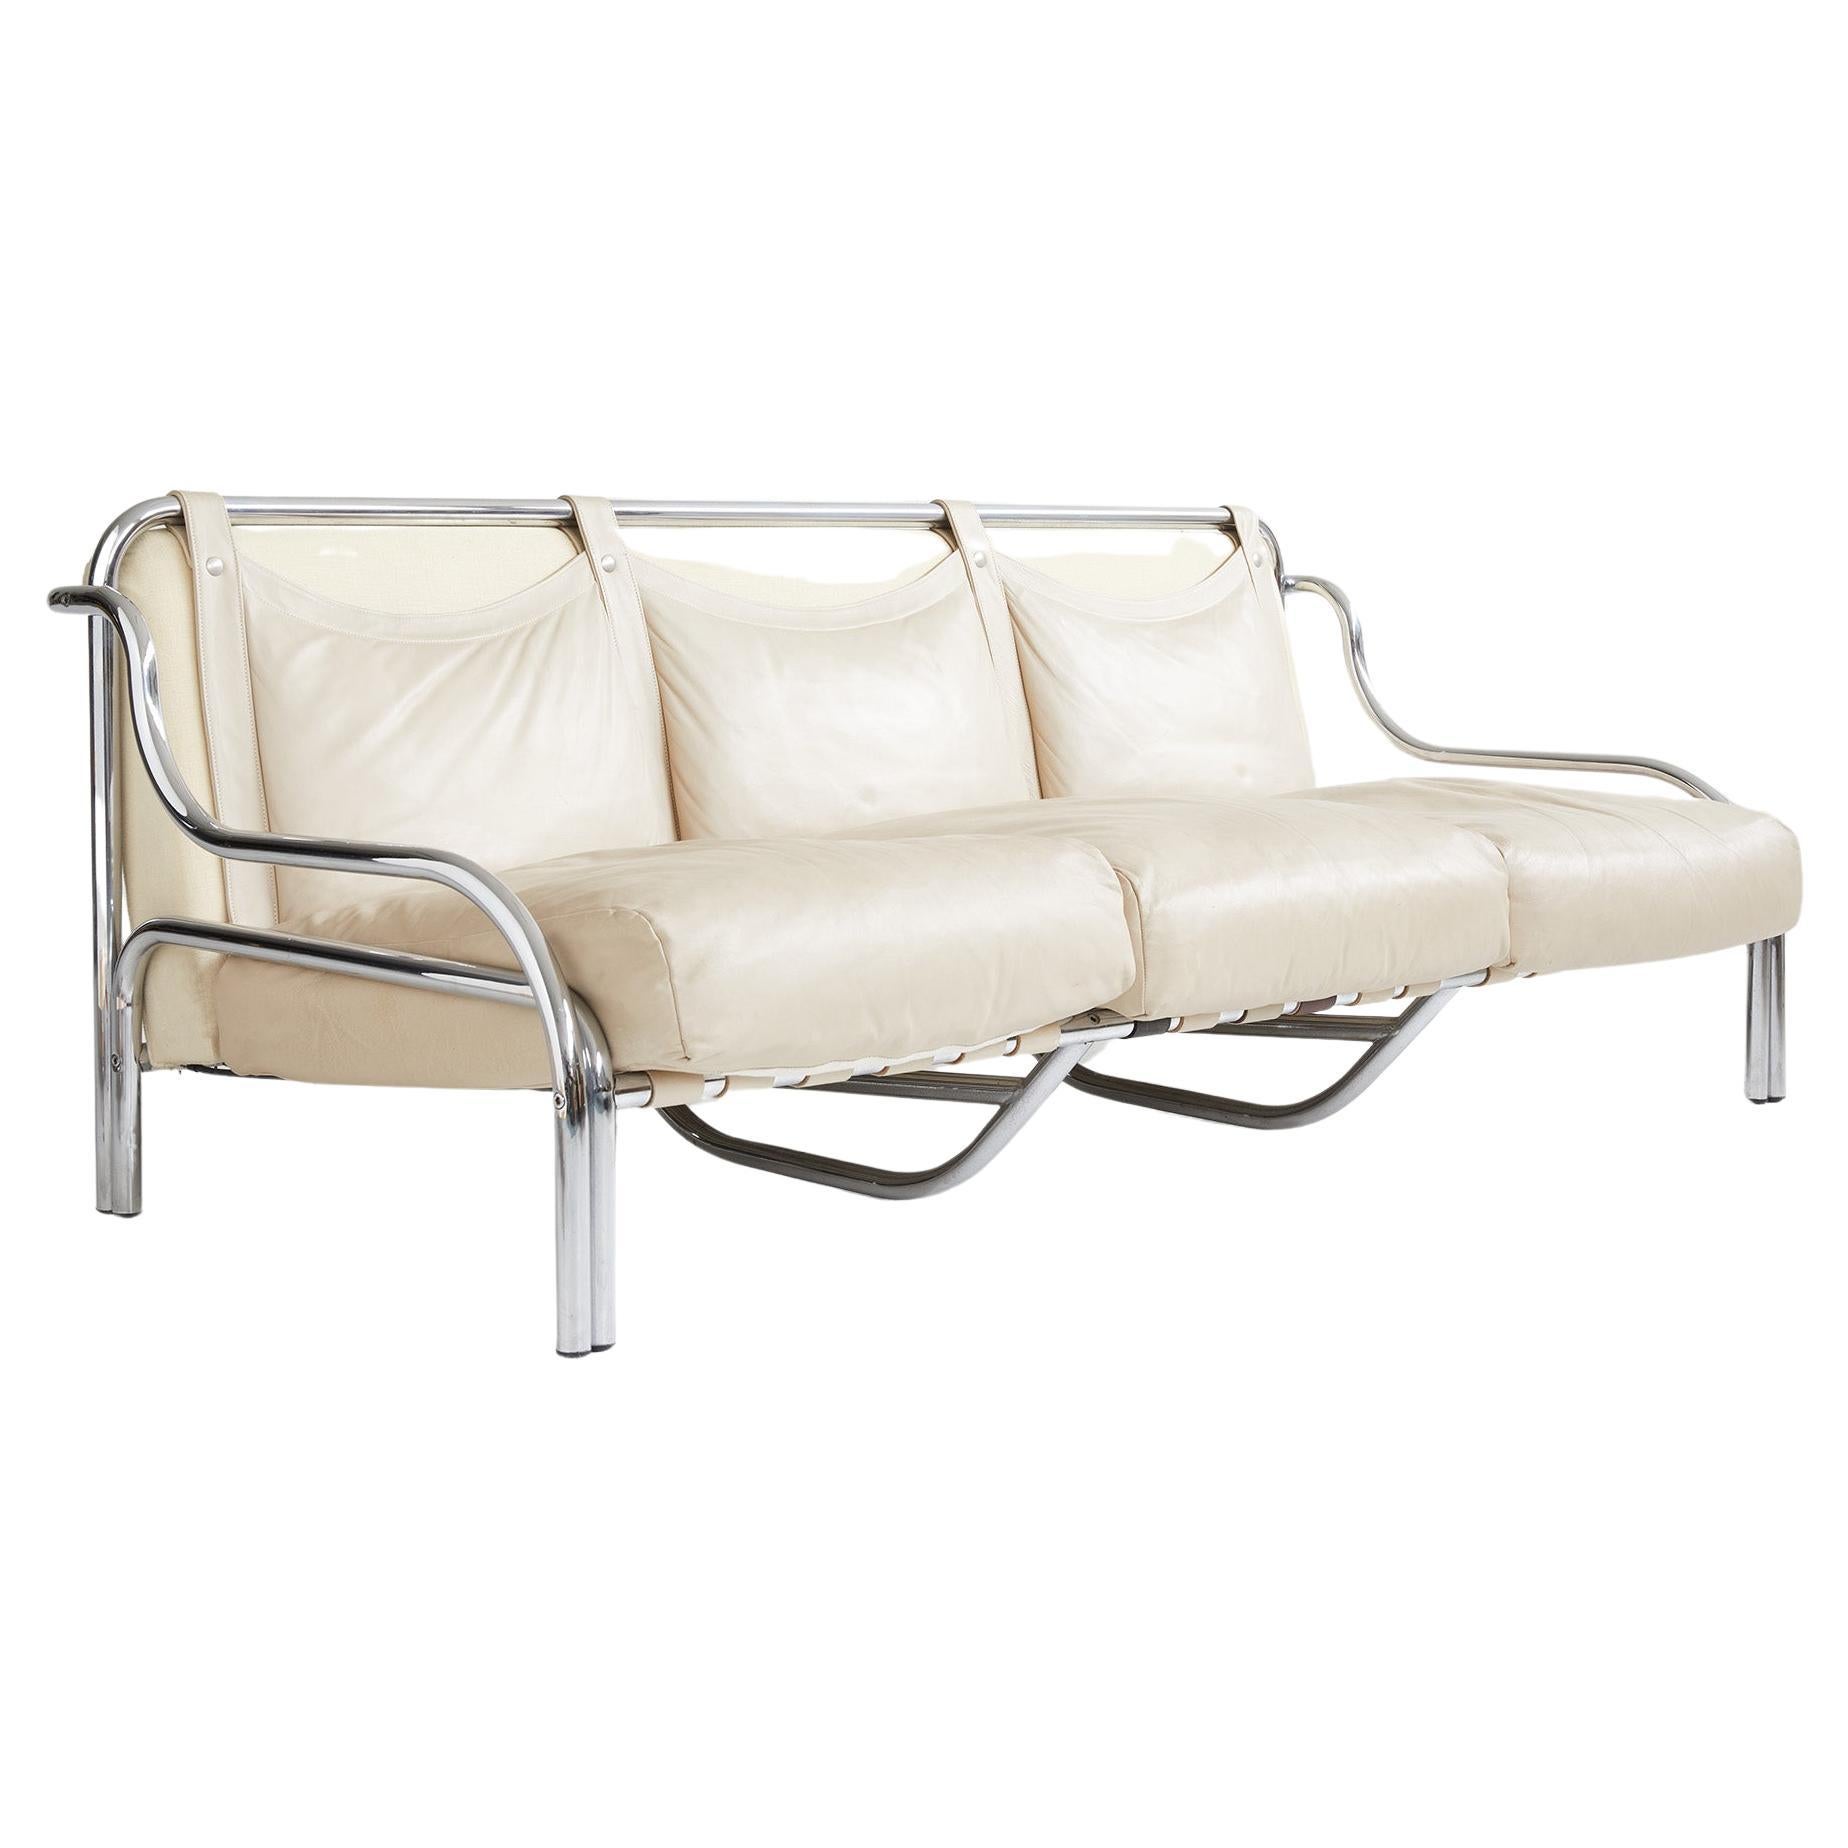 Three seater "Stringa" leather sofa by Gae Aulenti for Poltronova Italy 1962 For Sale